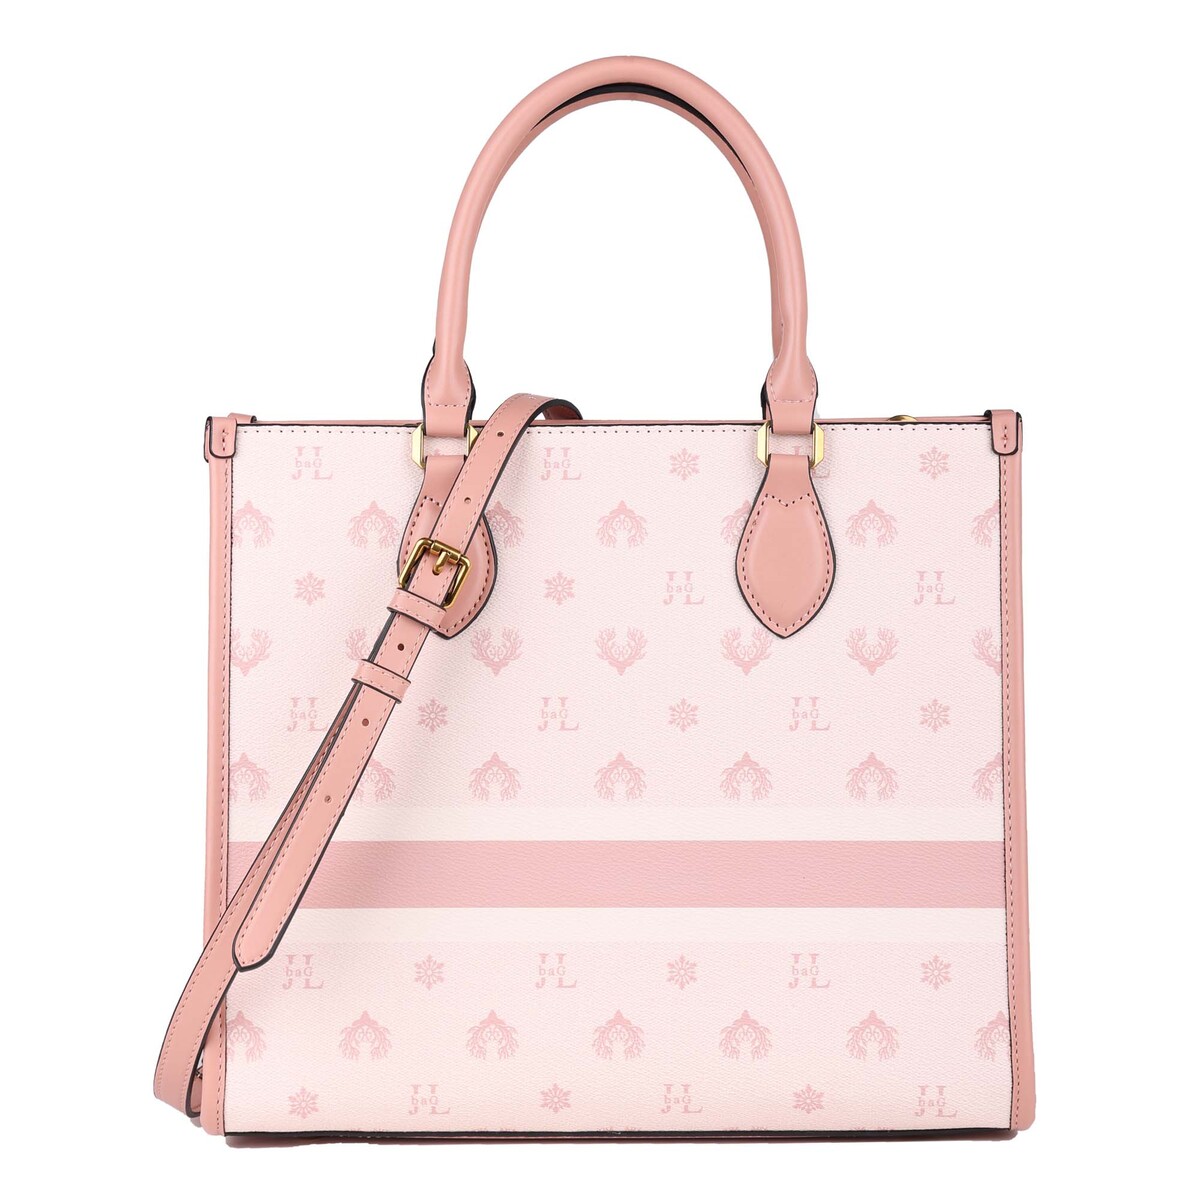 John Louis Women's Fashion Bag JLTT23-01, Pink